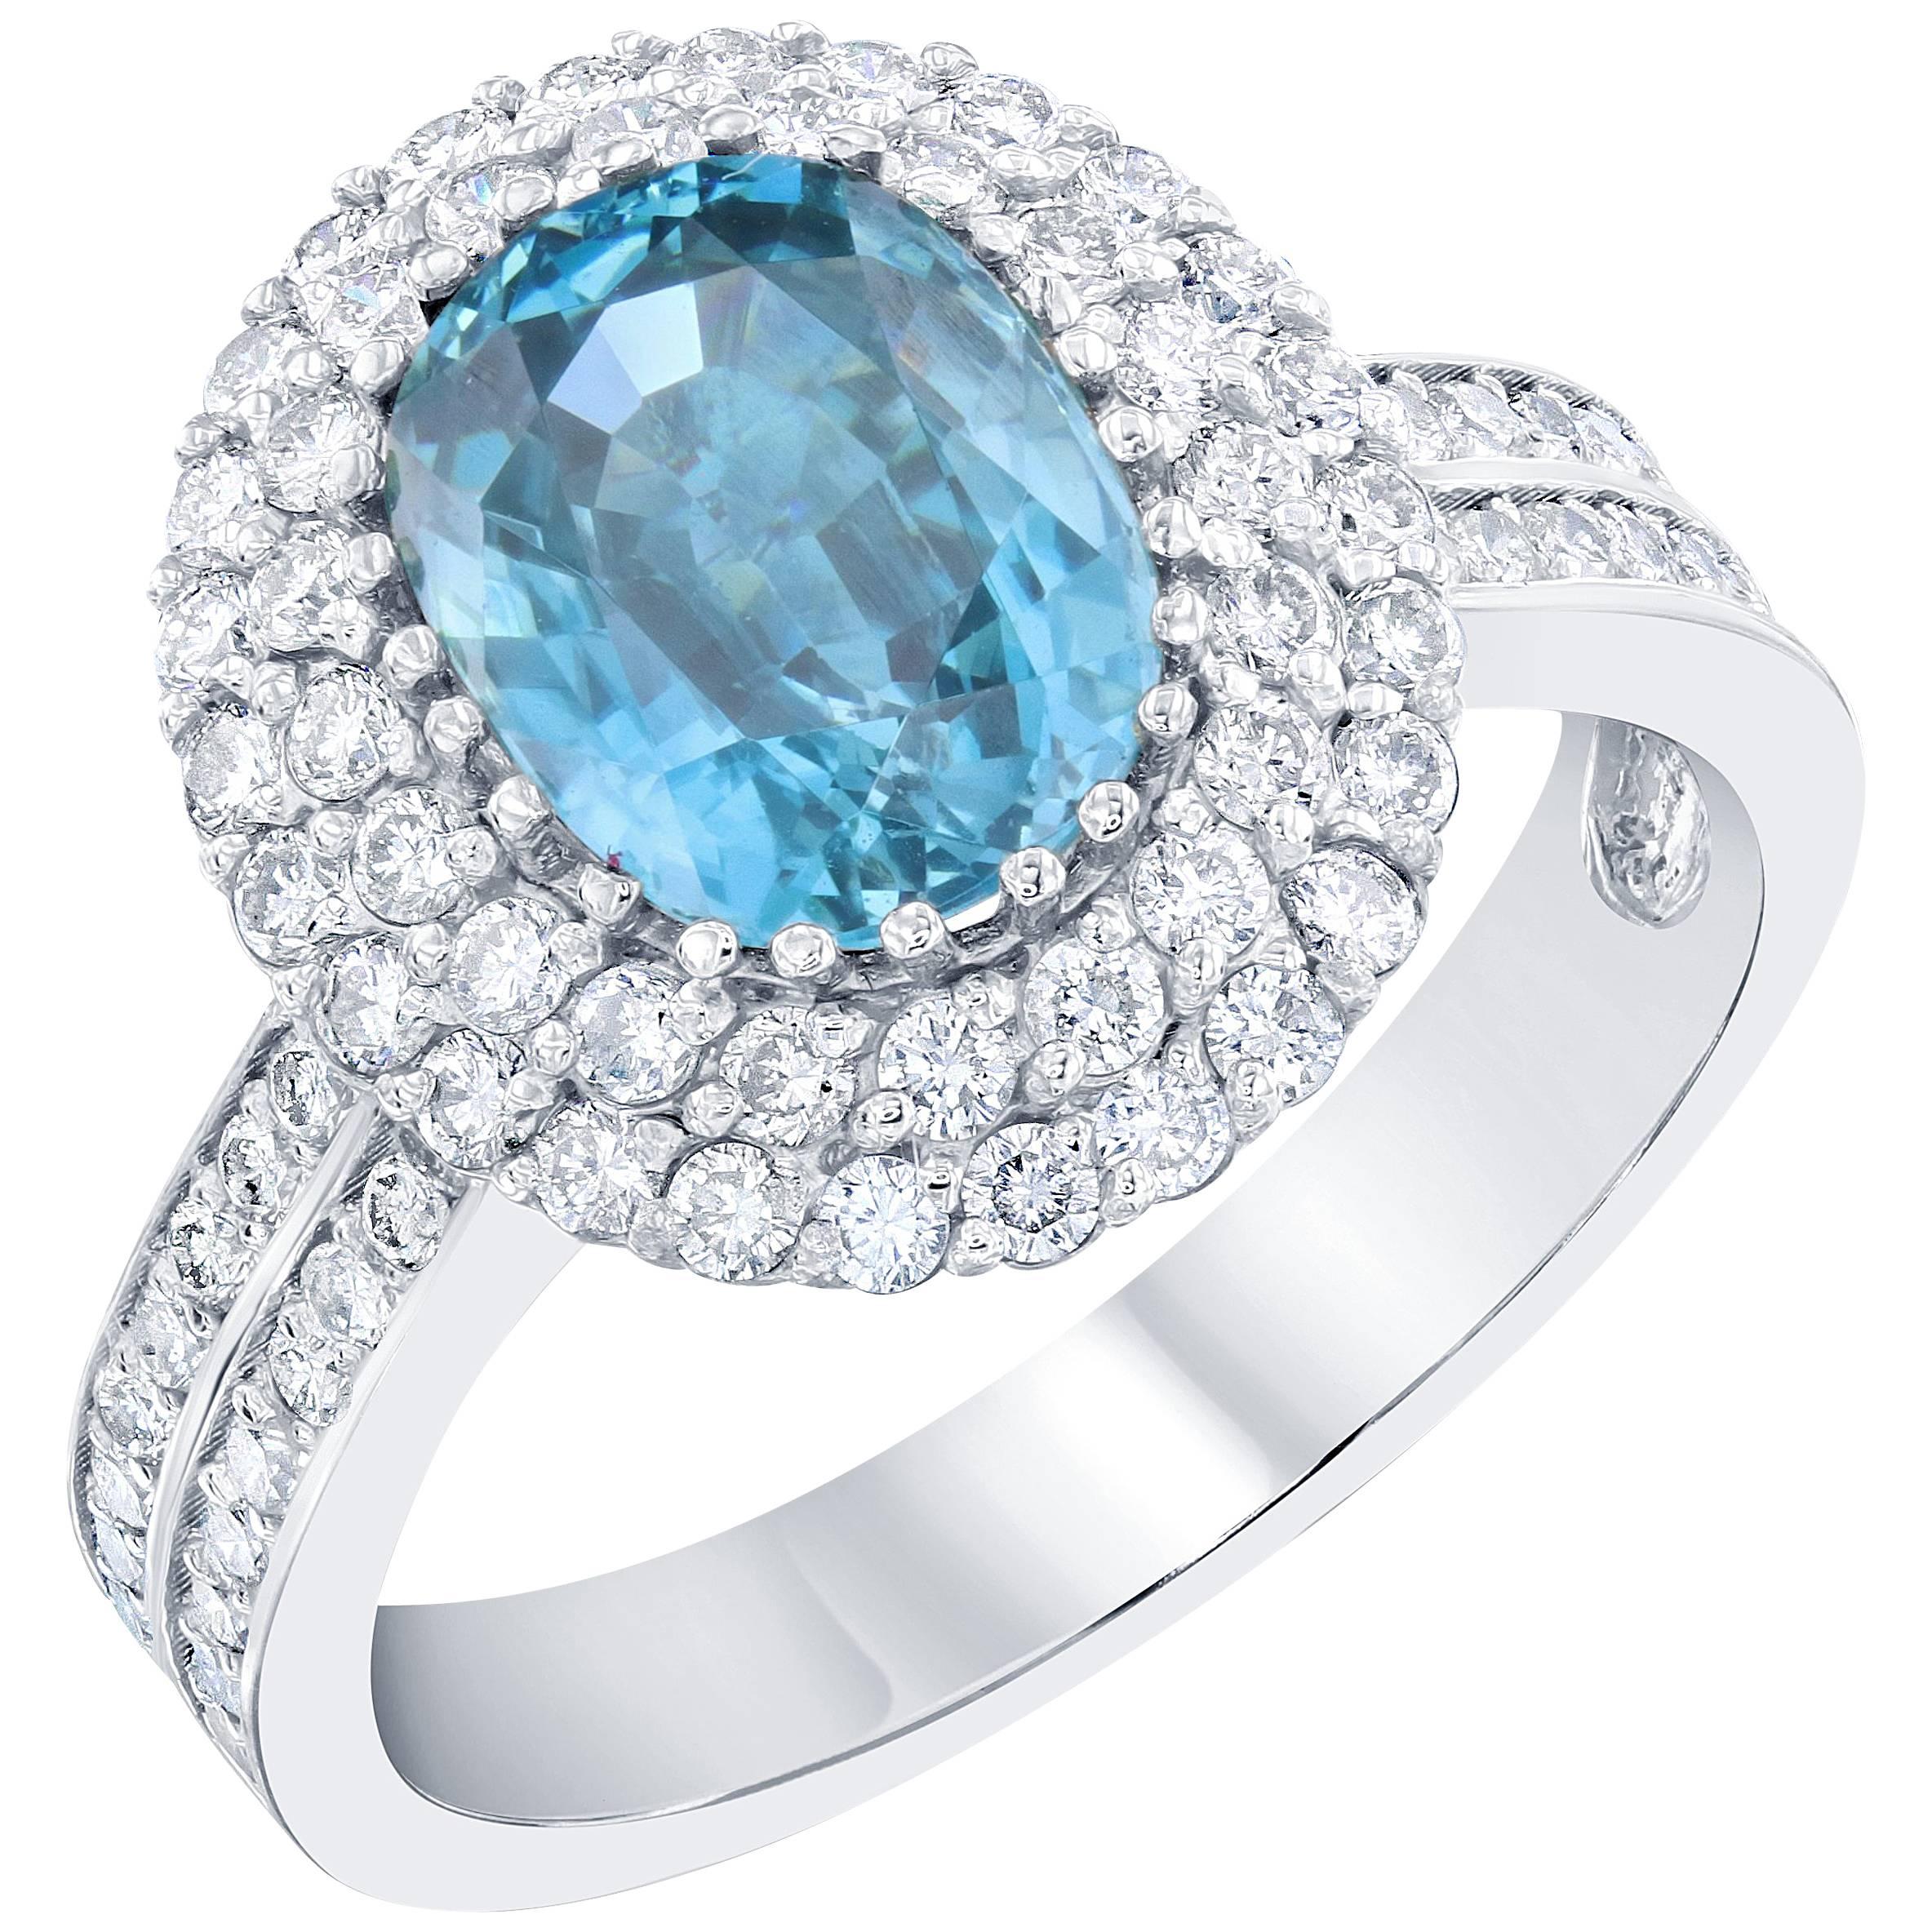 4.49 Carat Blue Zircon Diamond Ring